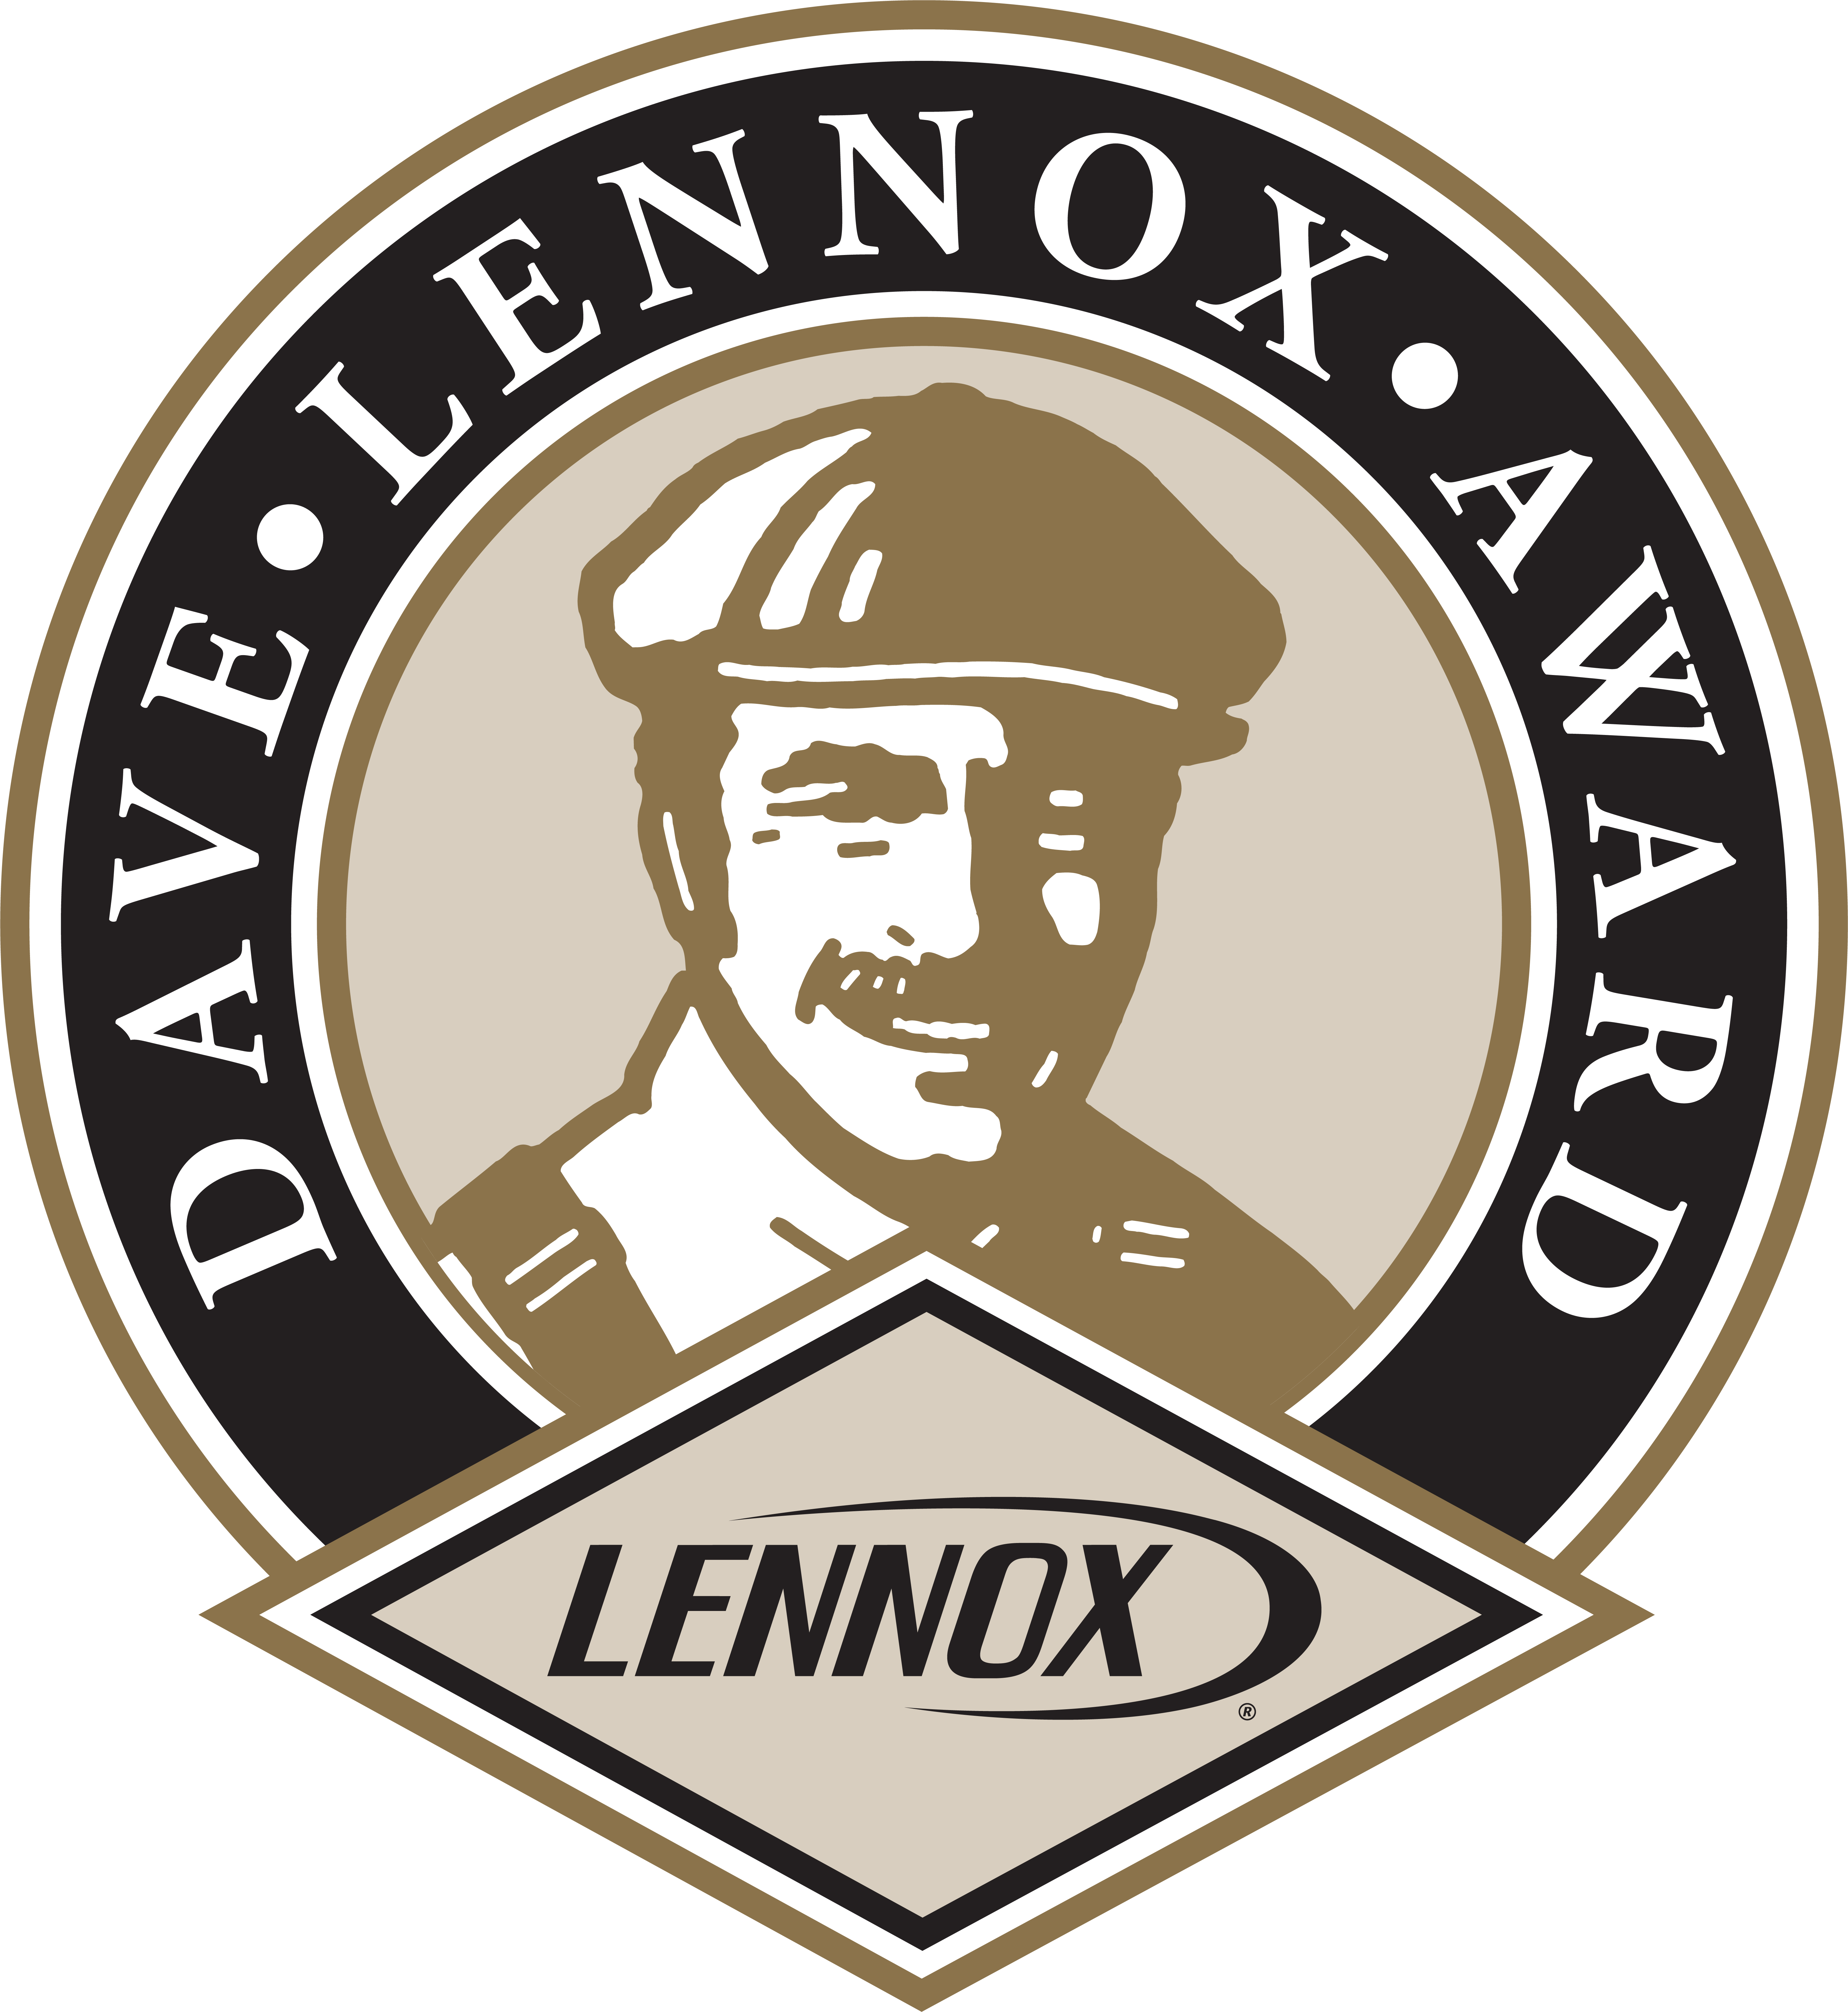 Dave Lennox Award logo